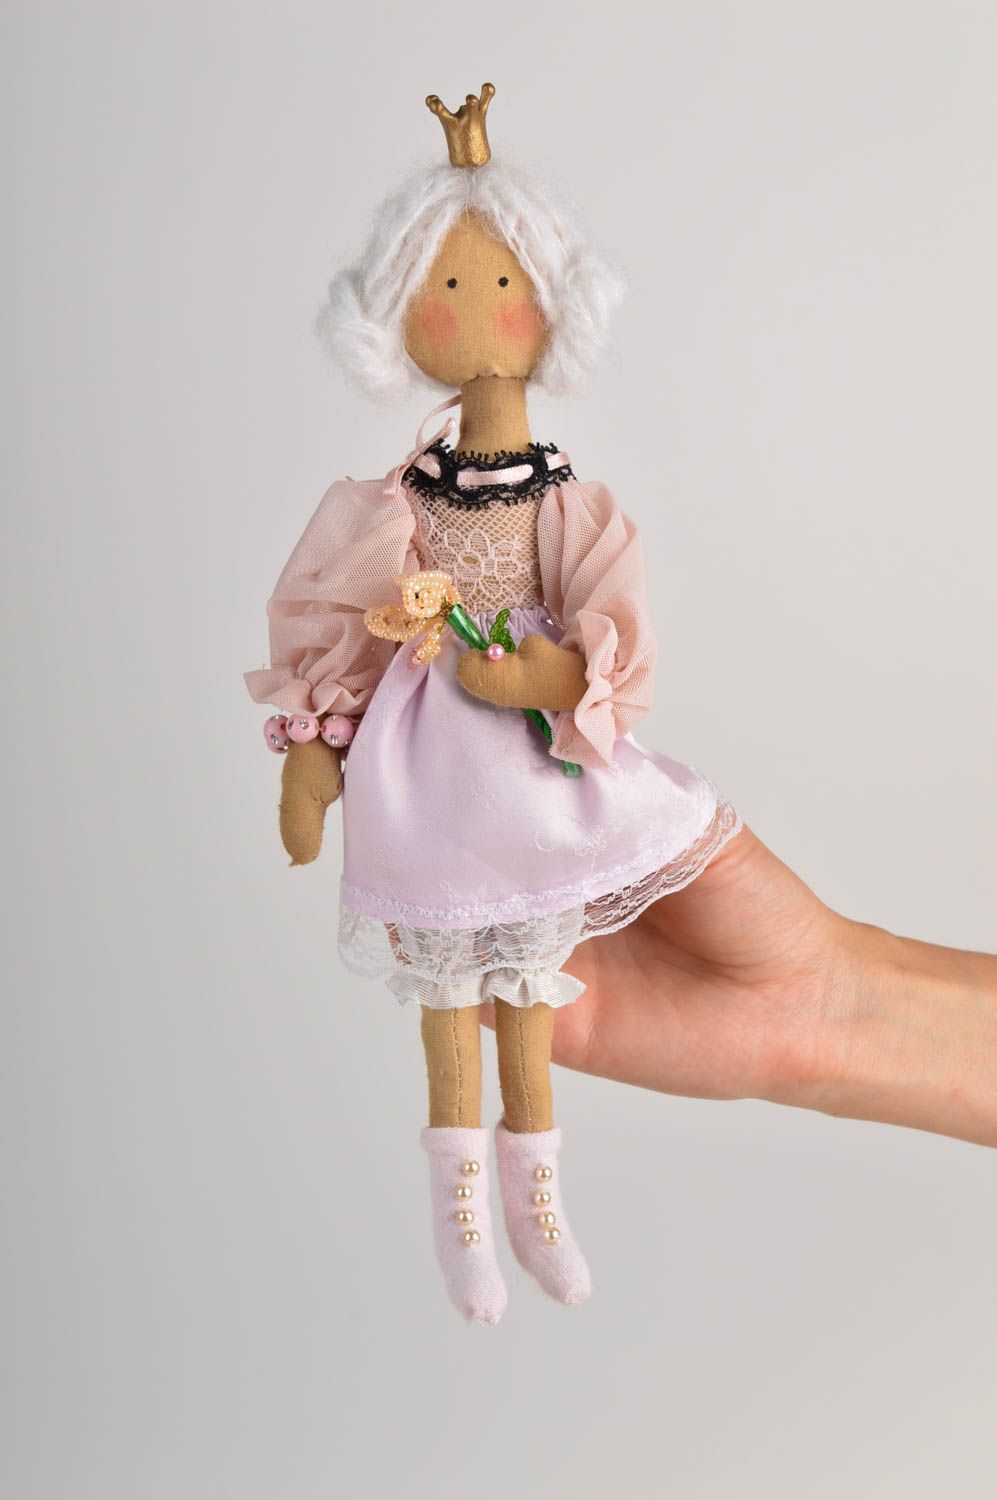 Handmade doll princess stuffed toy designer childrens toy decoration ideas photo 5